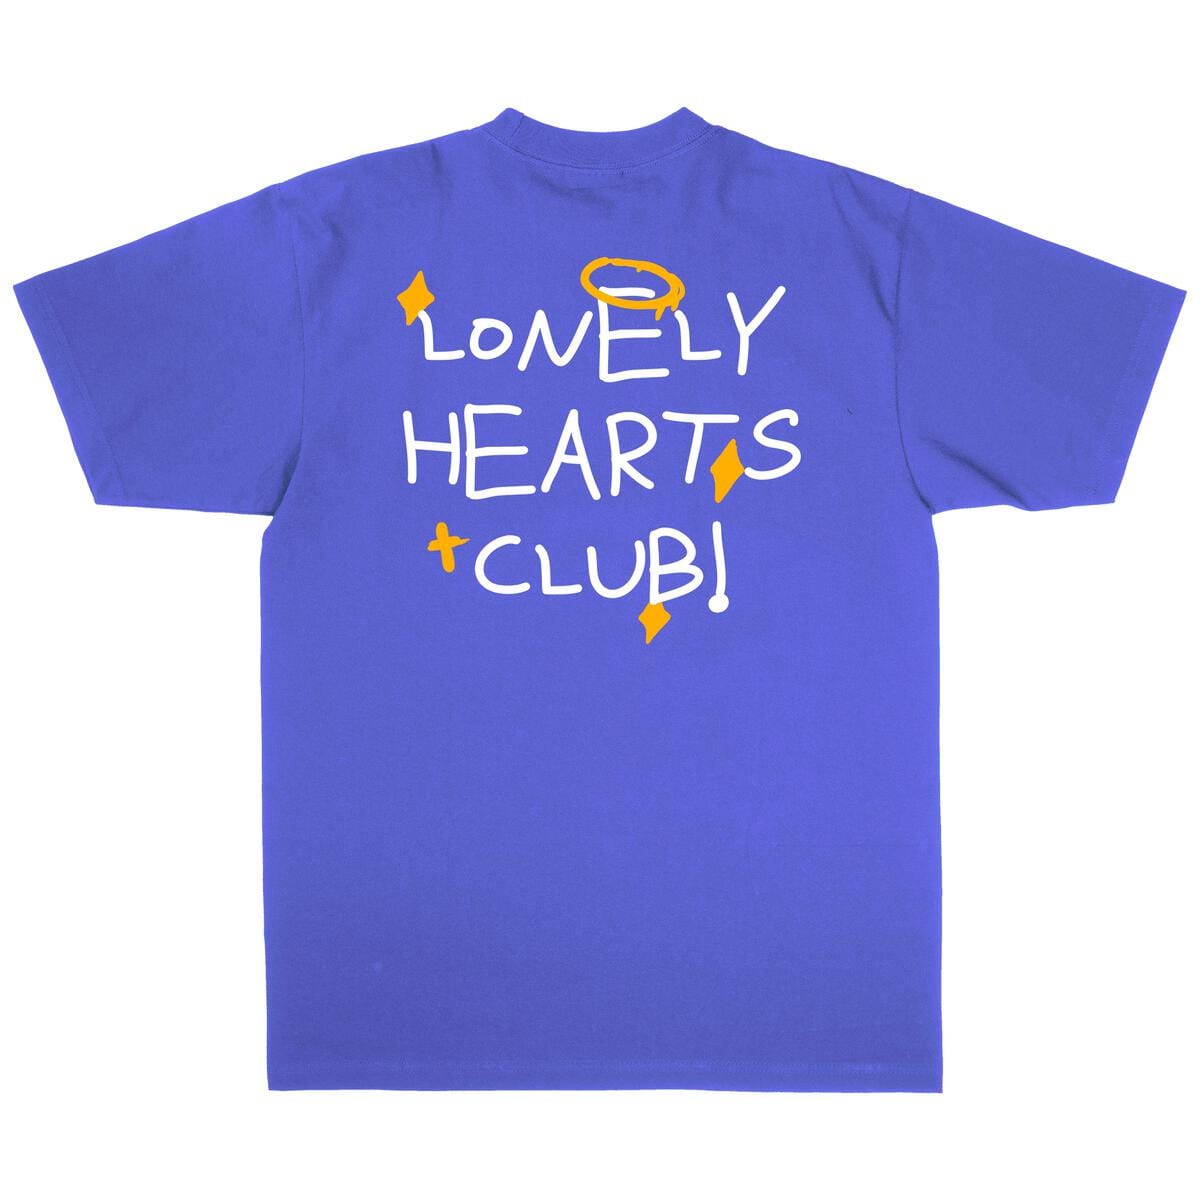 LONLY HEARTS T SHIRT Heaven sent T-shirt